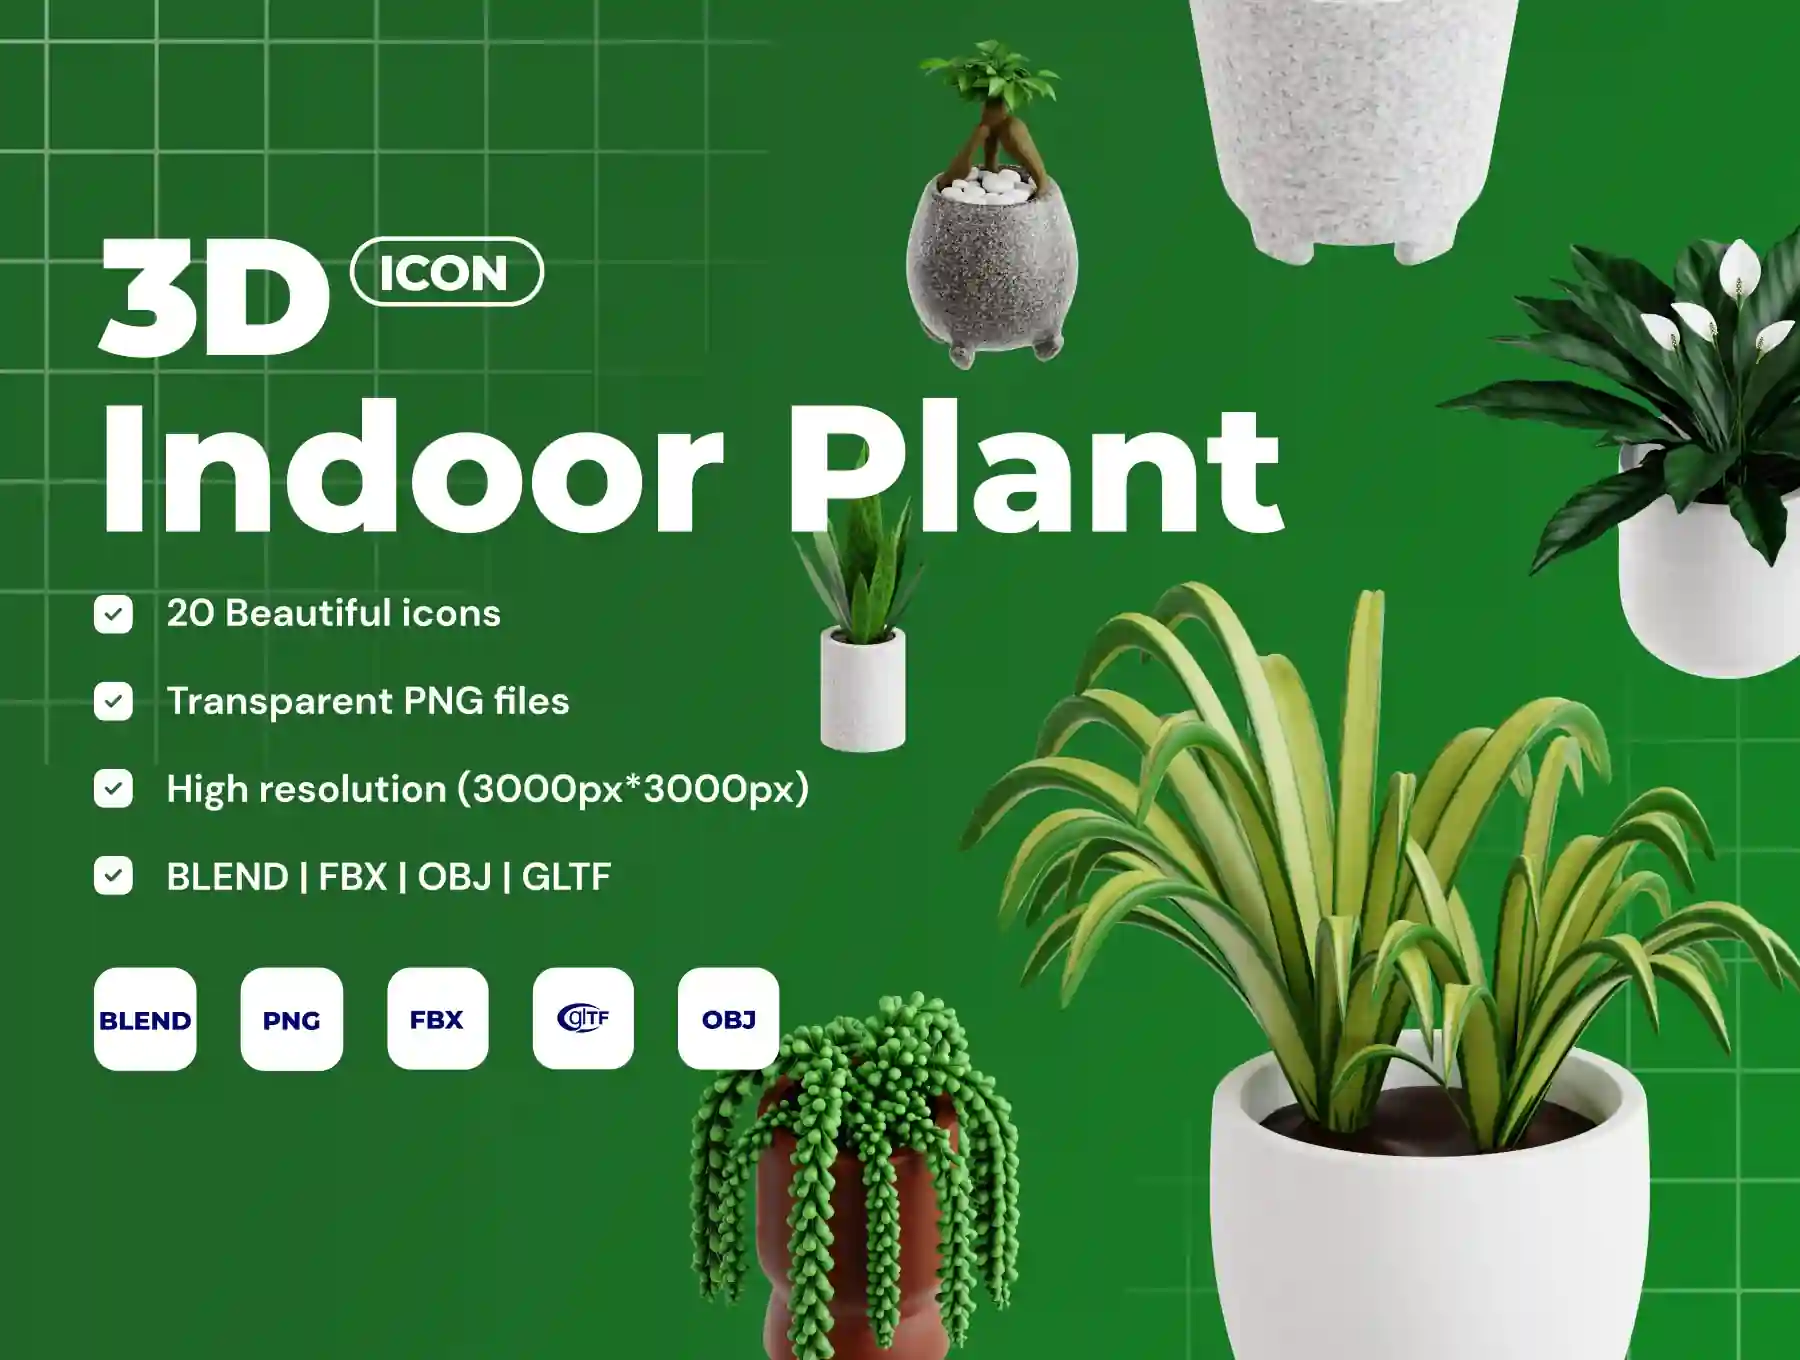 Indoor Plants 3D Icon Set